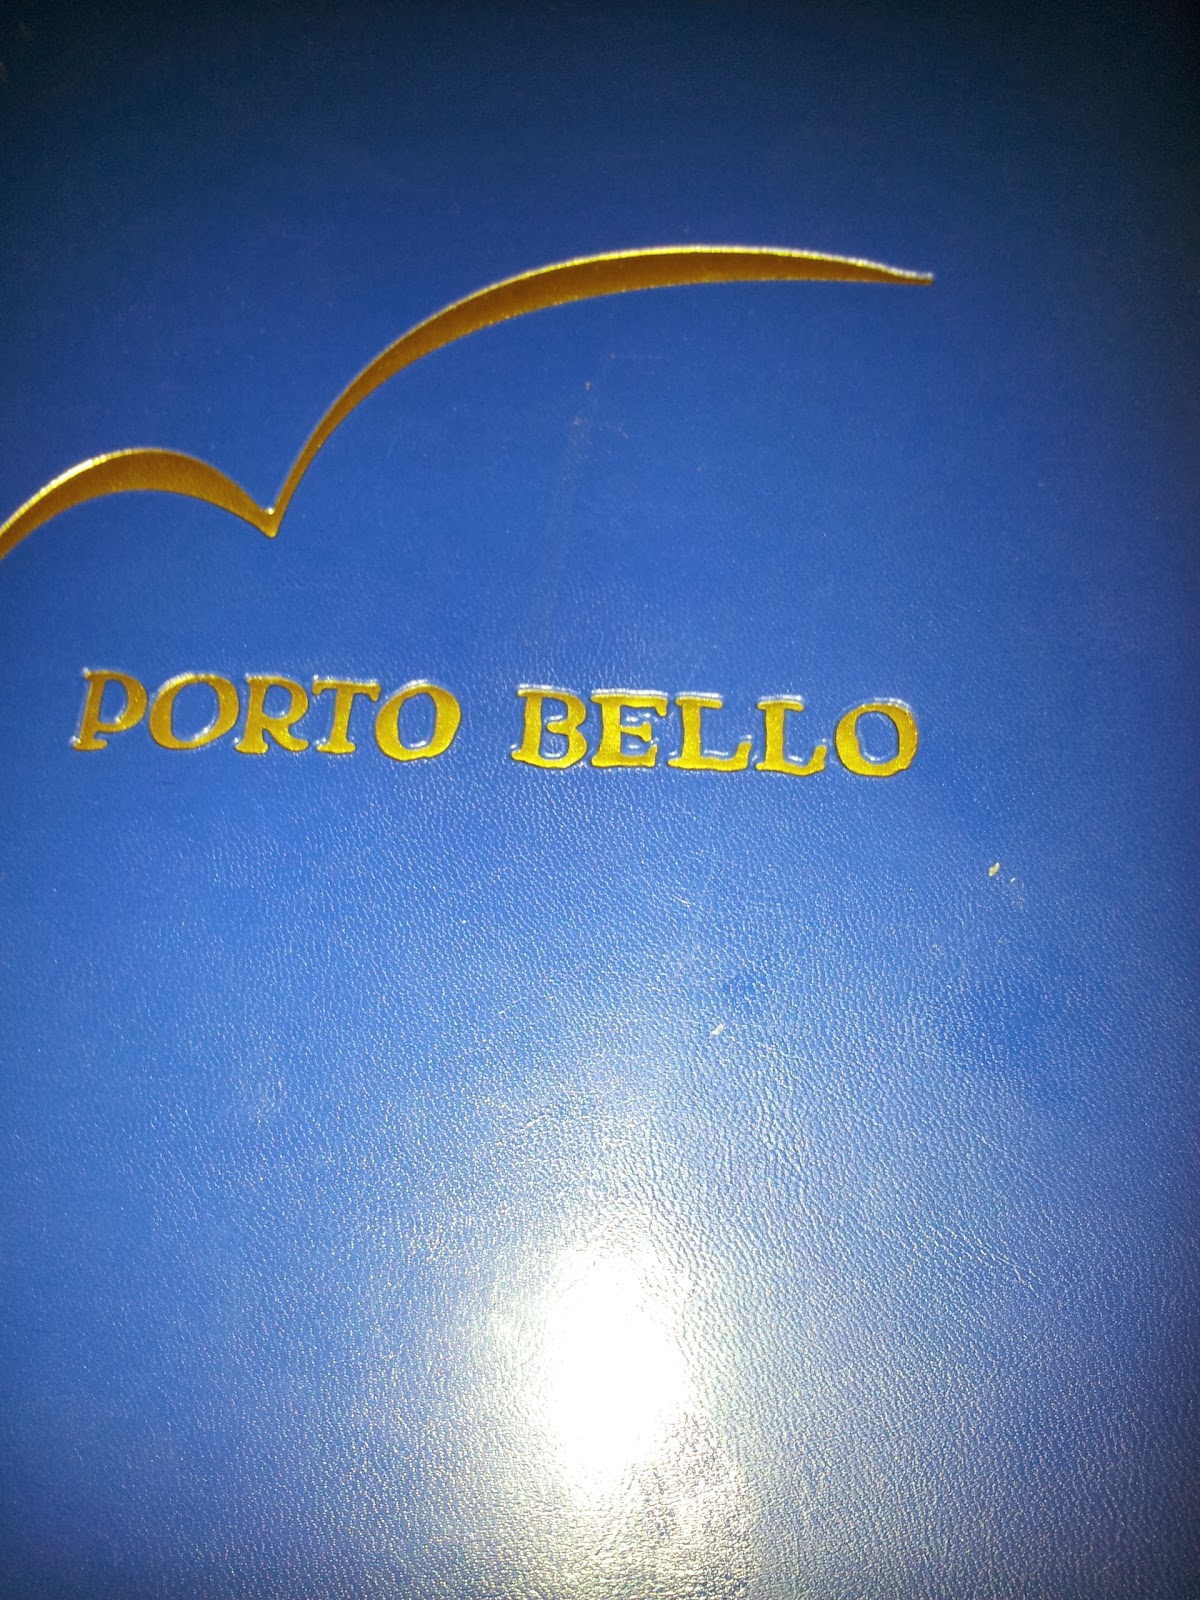 Photo of Porto Bello in New York City, New York, United States - 3 Picture of Restaurant, Food, Point of interest, Establishment